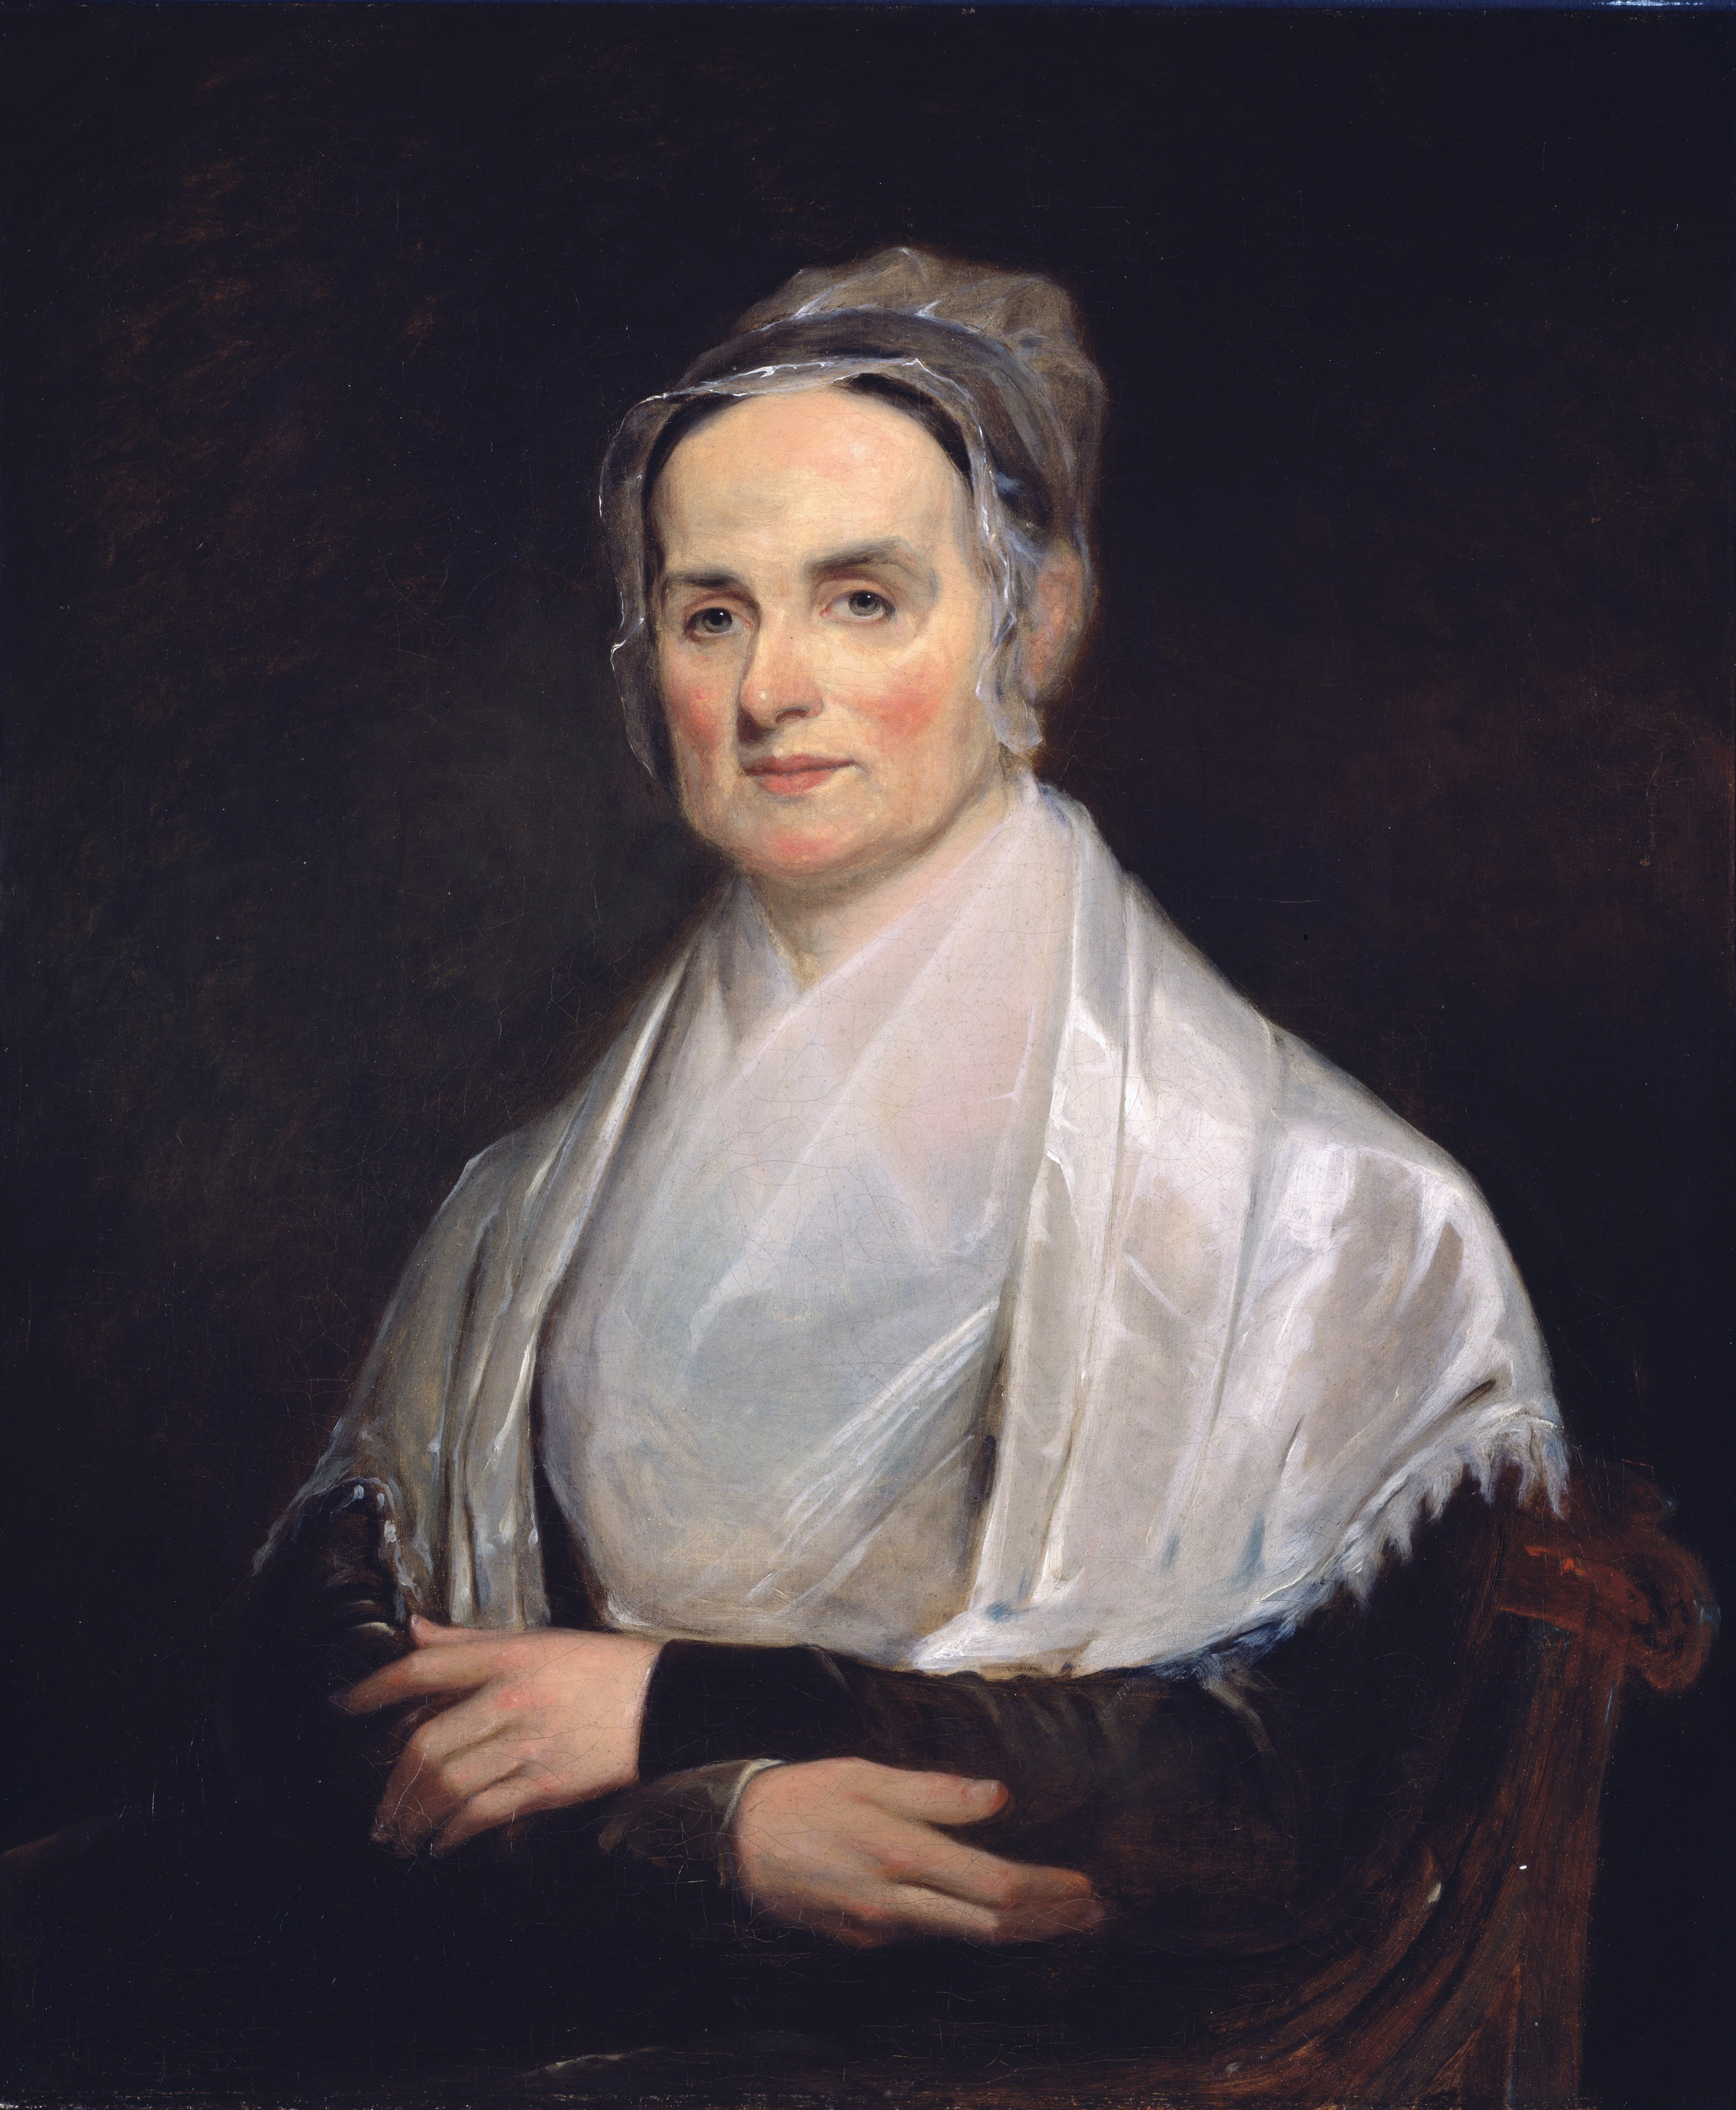 Lucretia Mott, Abolitionists, Advocate for Women's Rights, Quaker Leader wikipedia cc